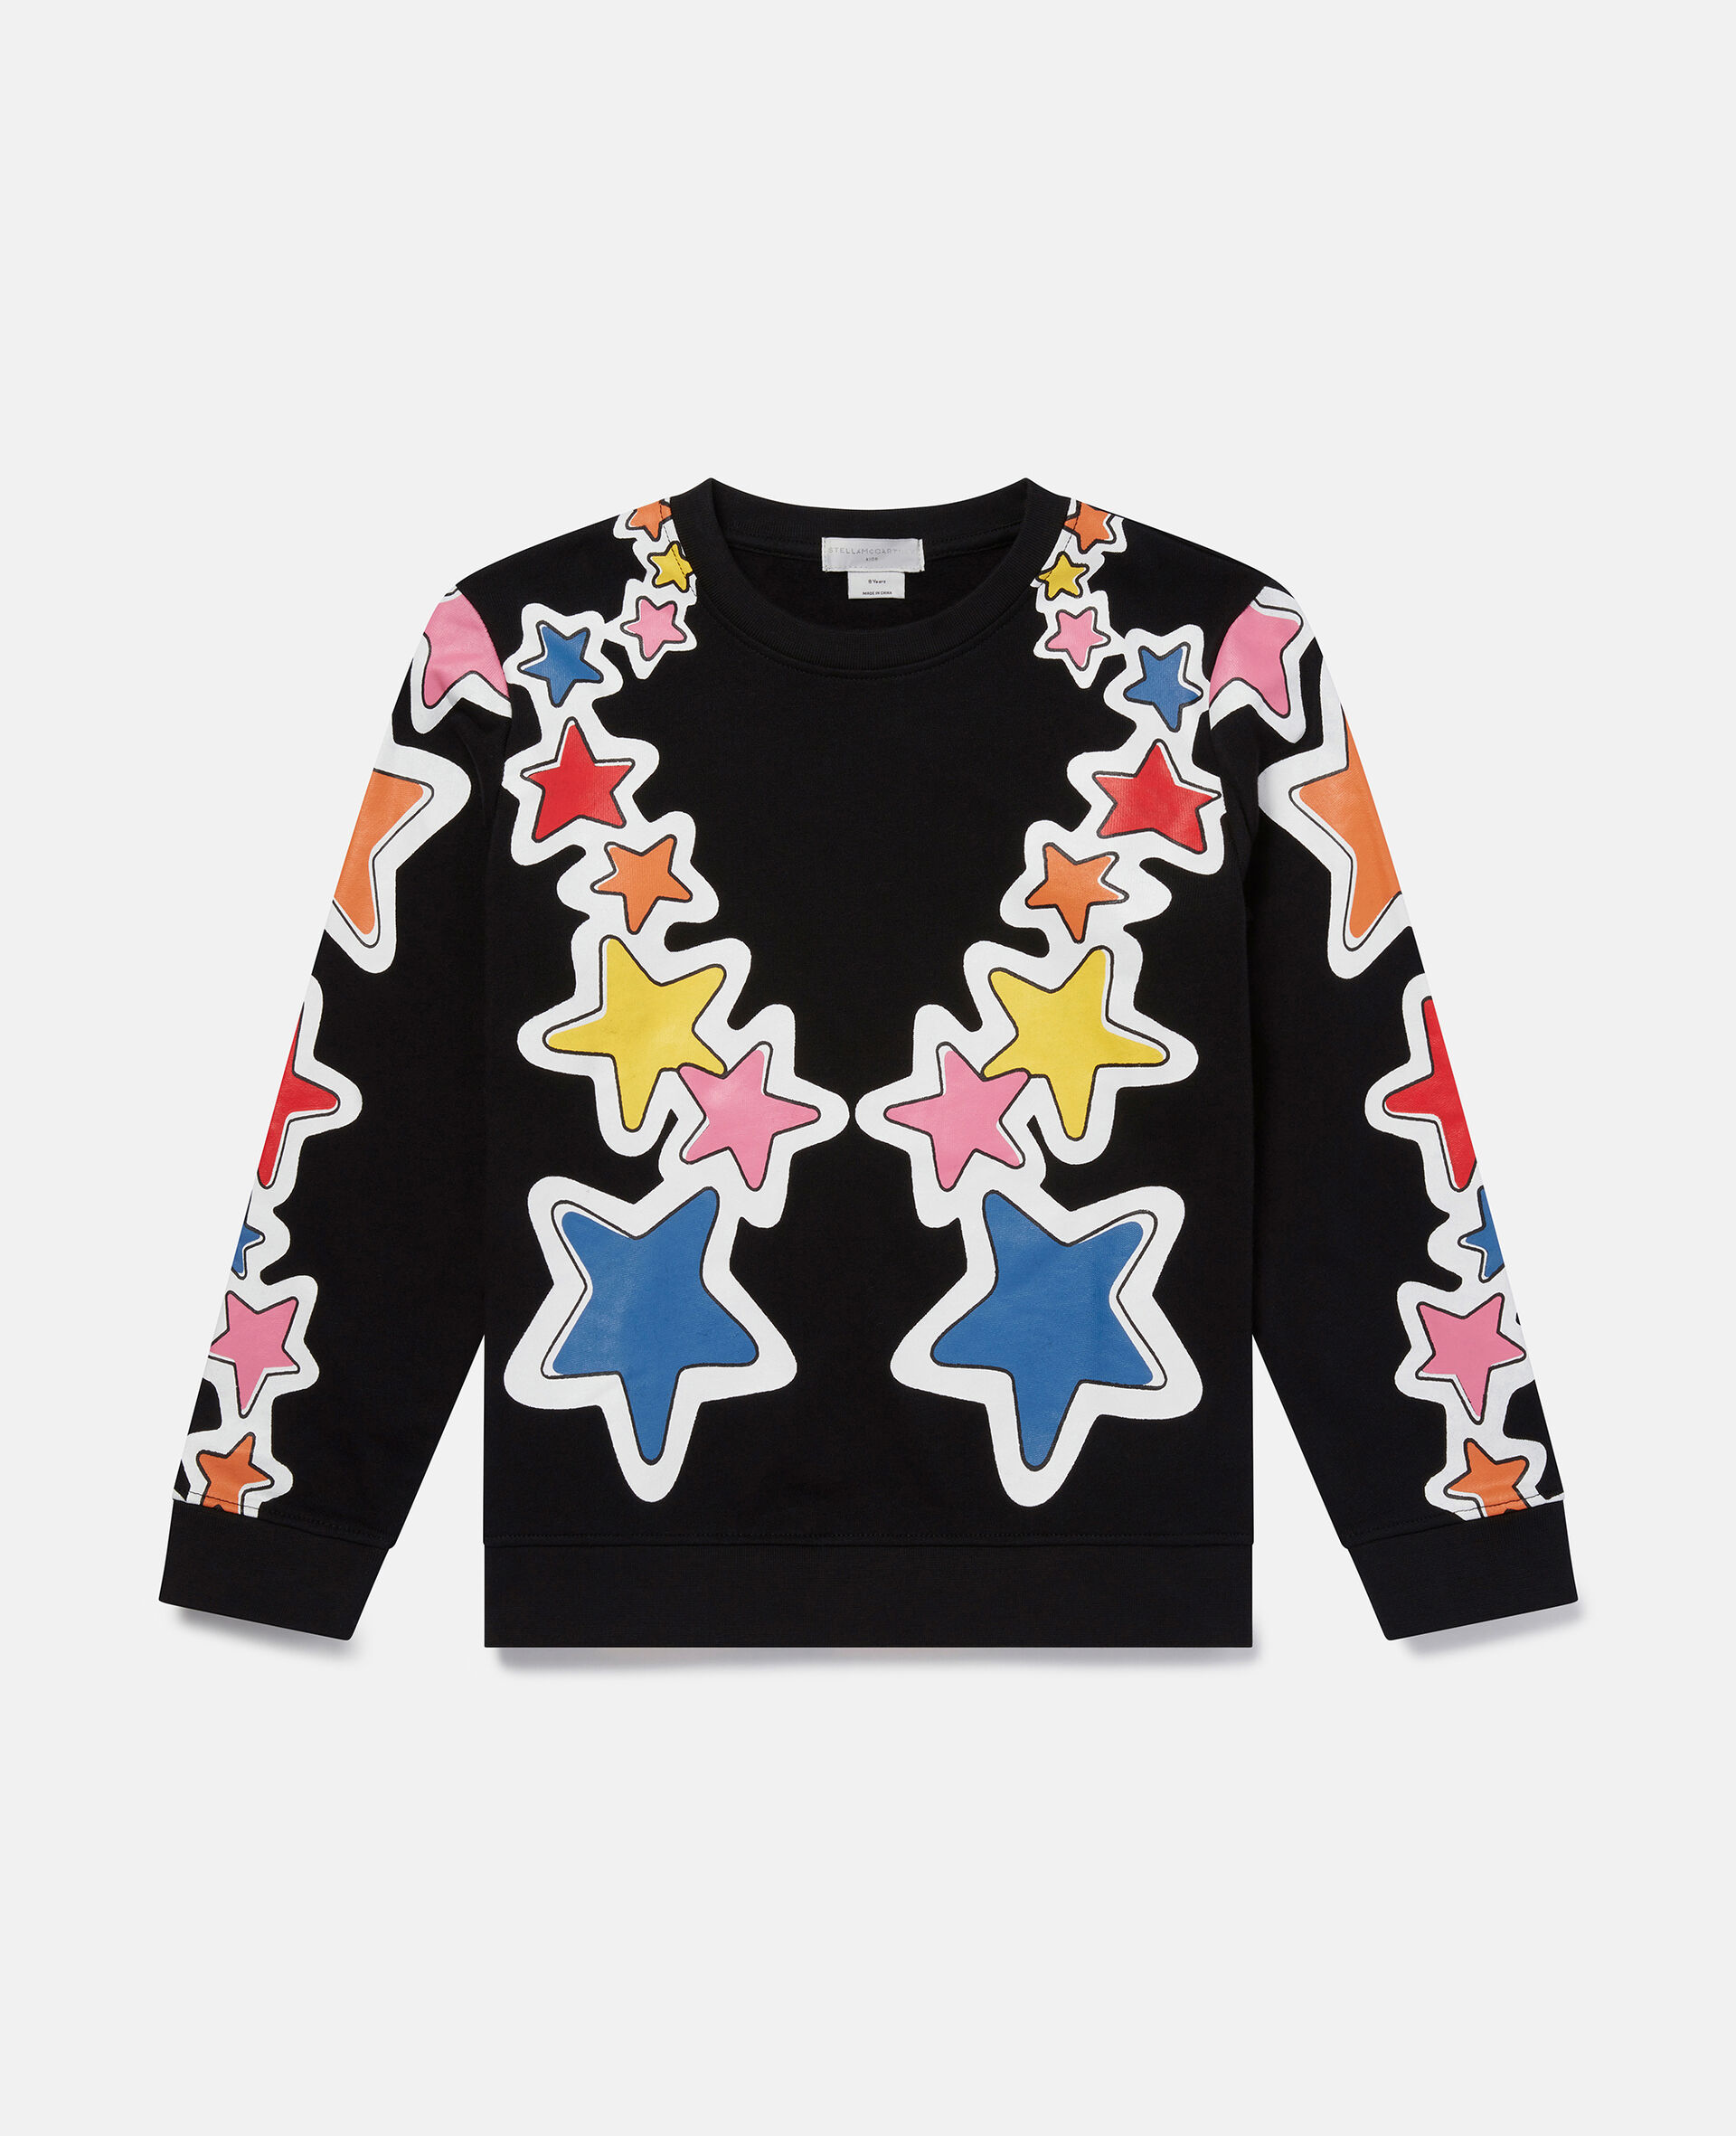 Cosmic Star Print Fleece Sweatshirt-Black-large